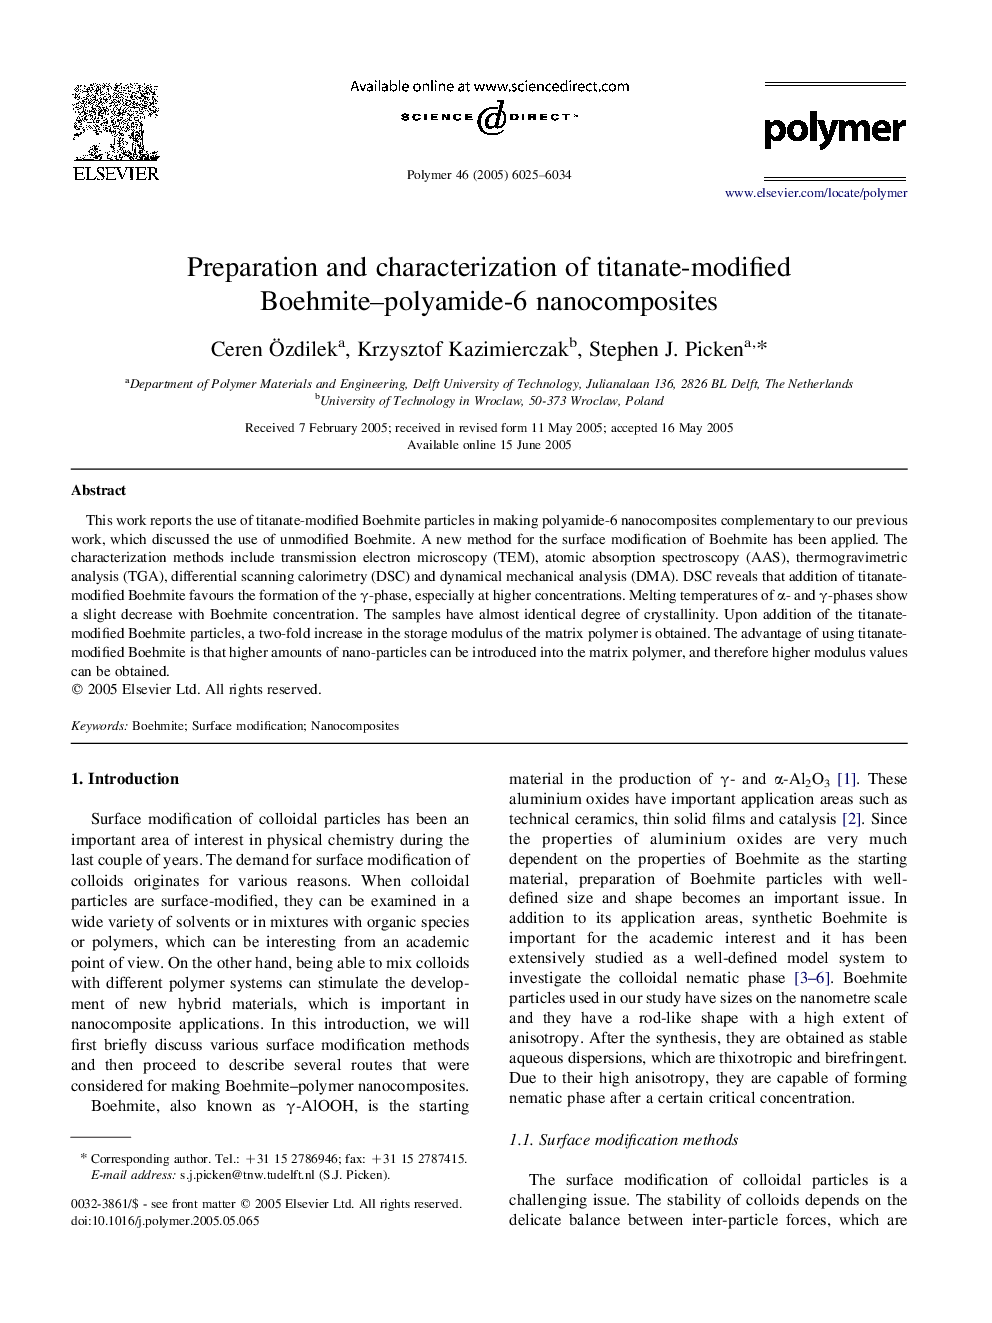 Preparation and characterization of titanate-modified Boehmite-polyamide-6 nanocomposites